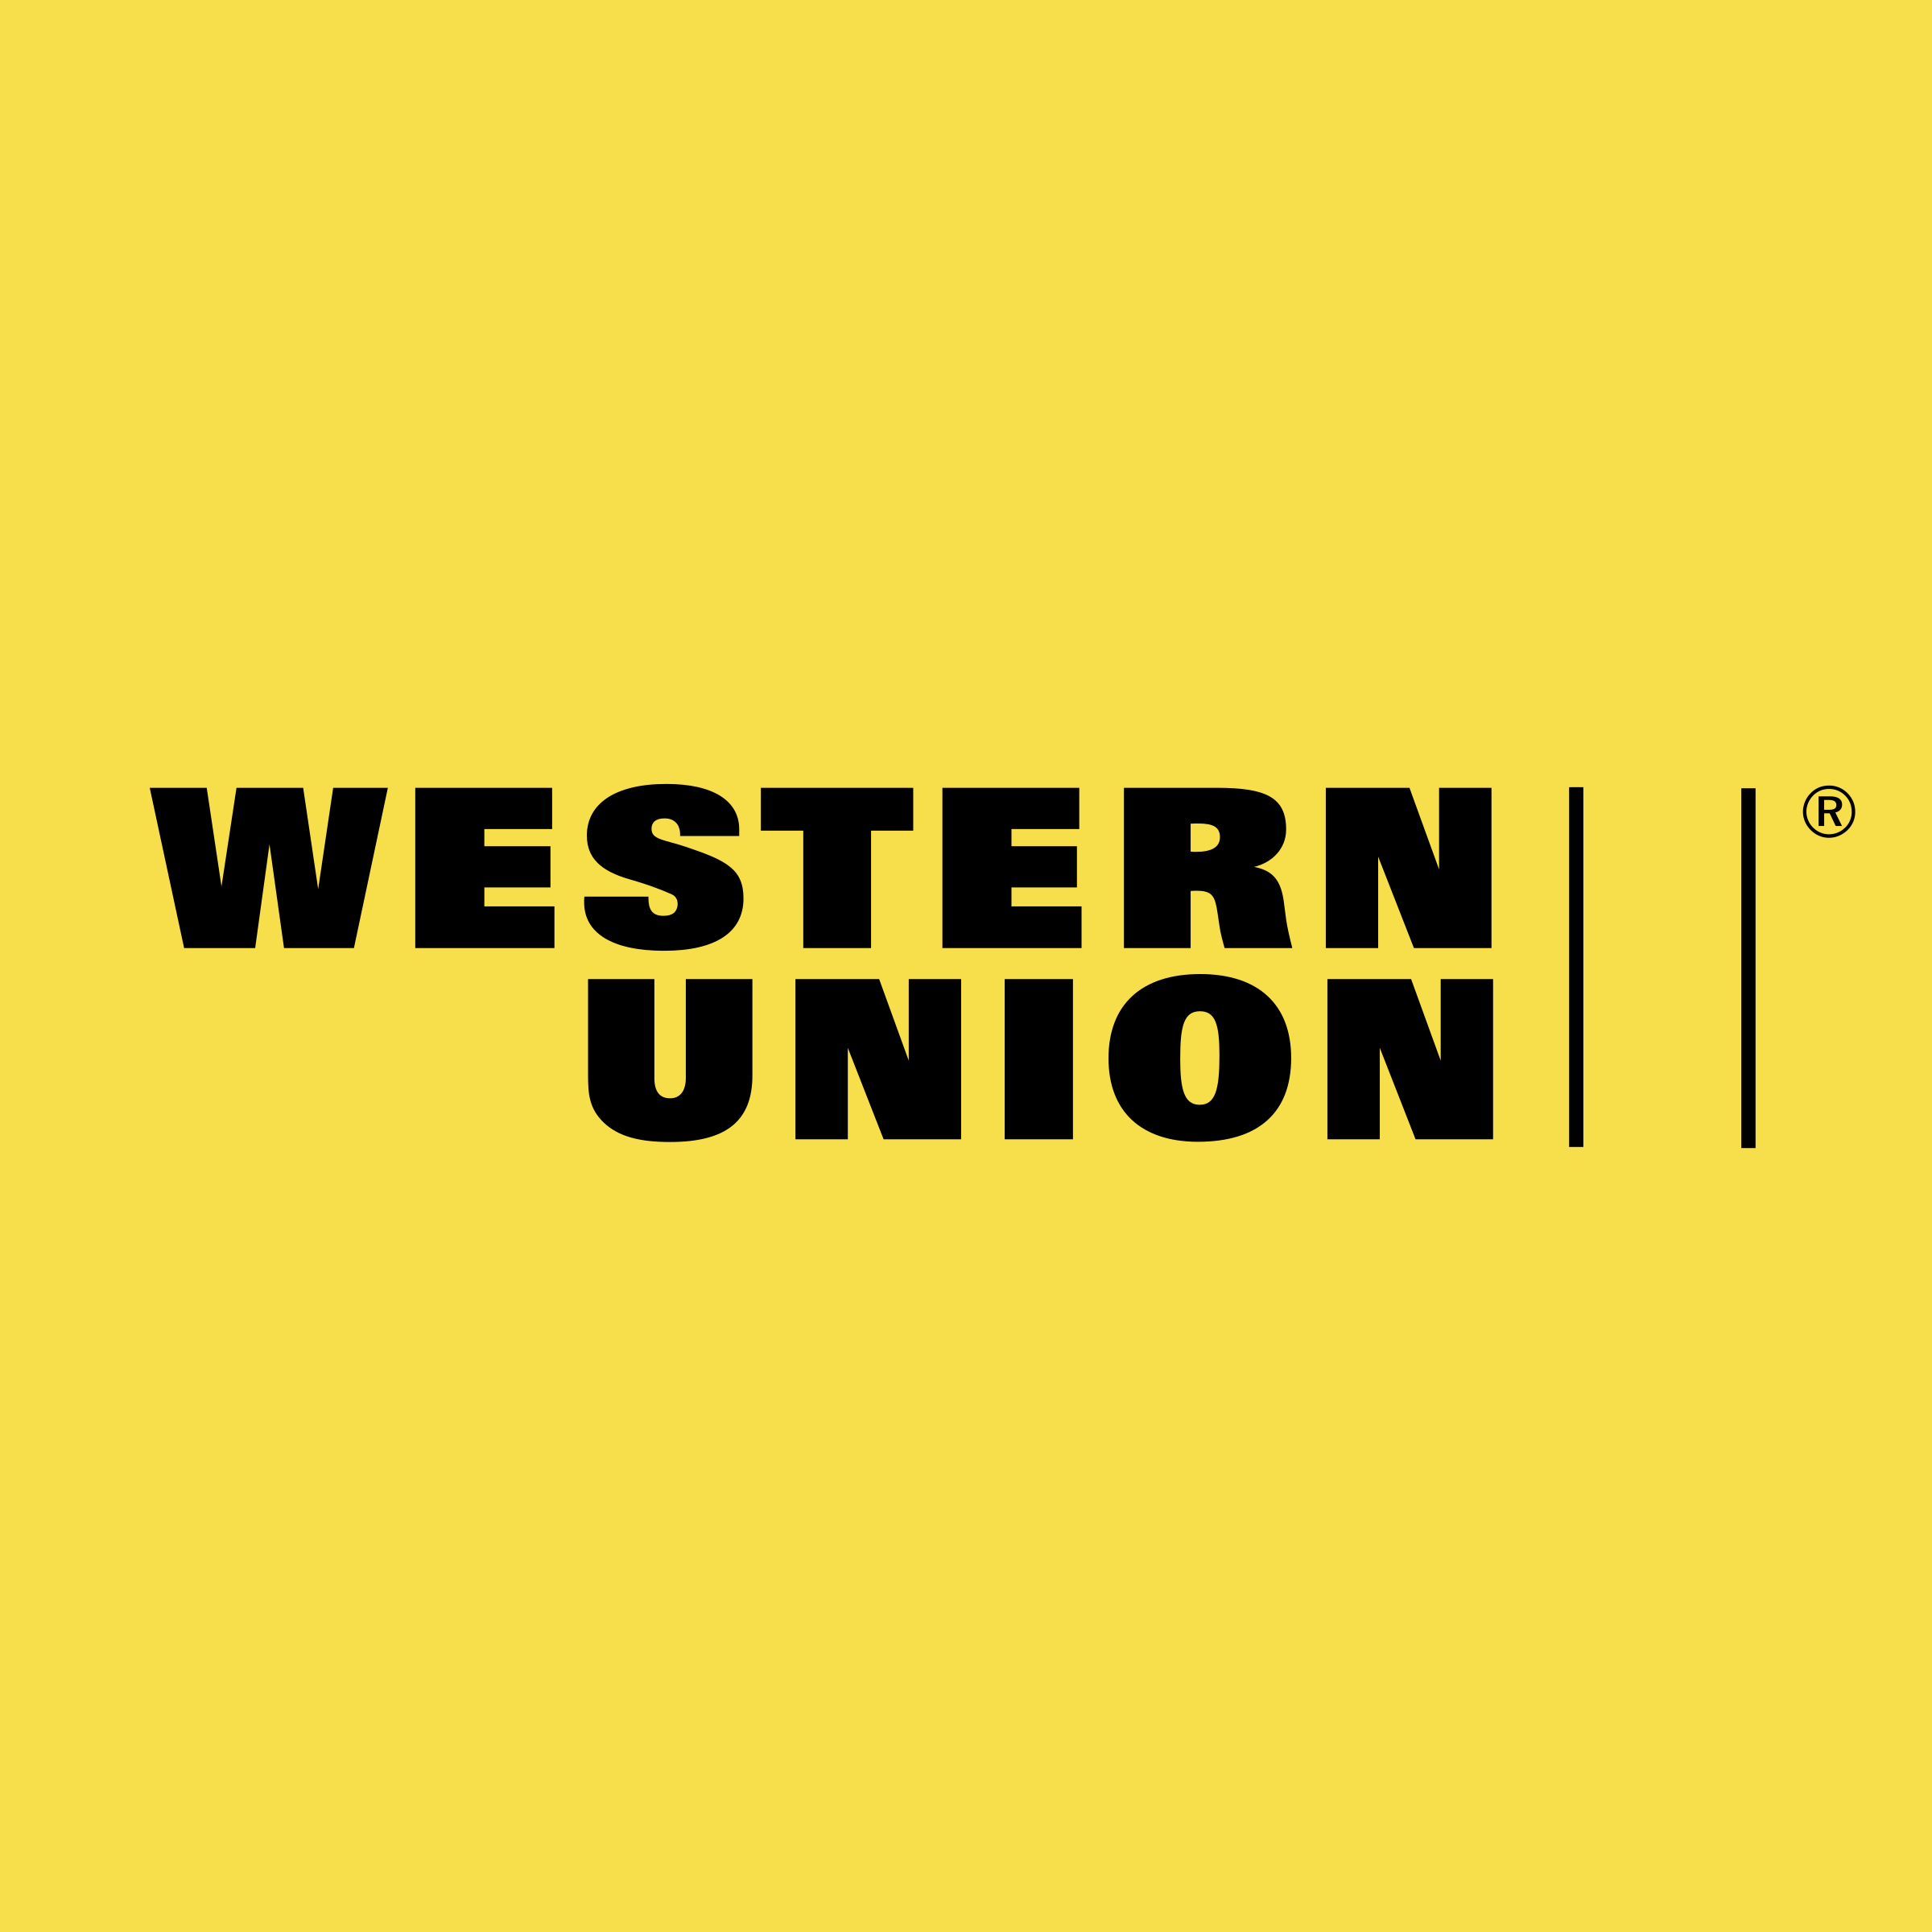 Westernunion Logo - Western Union Logo PNG Transparent & SVG Vector